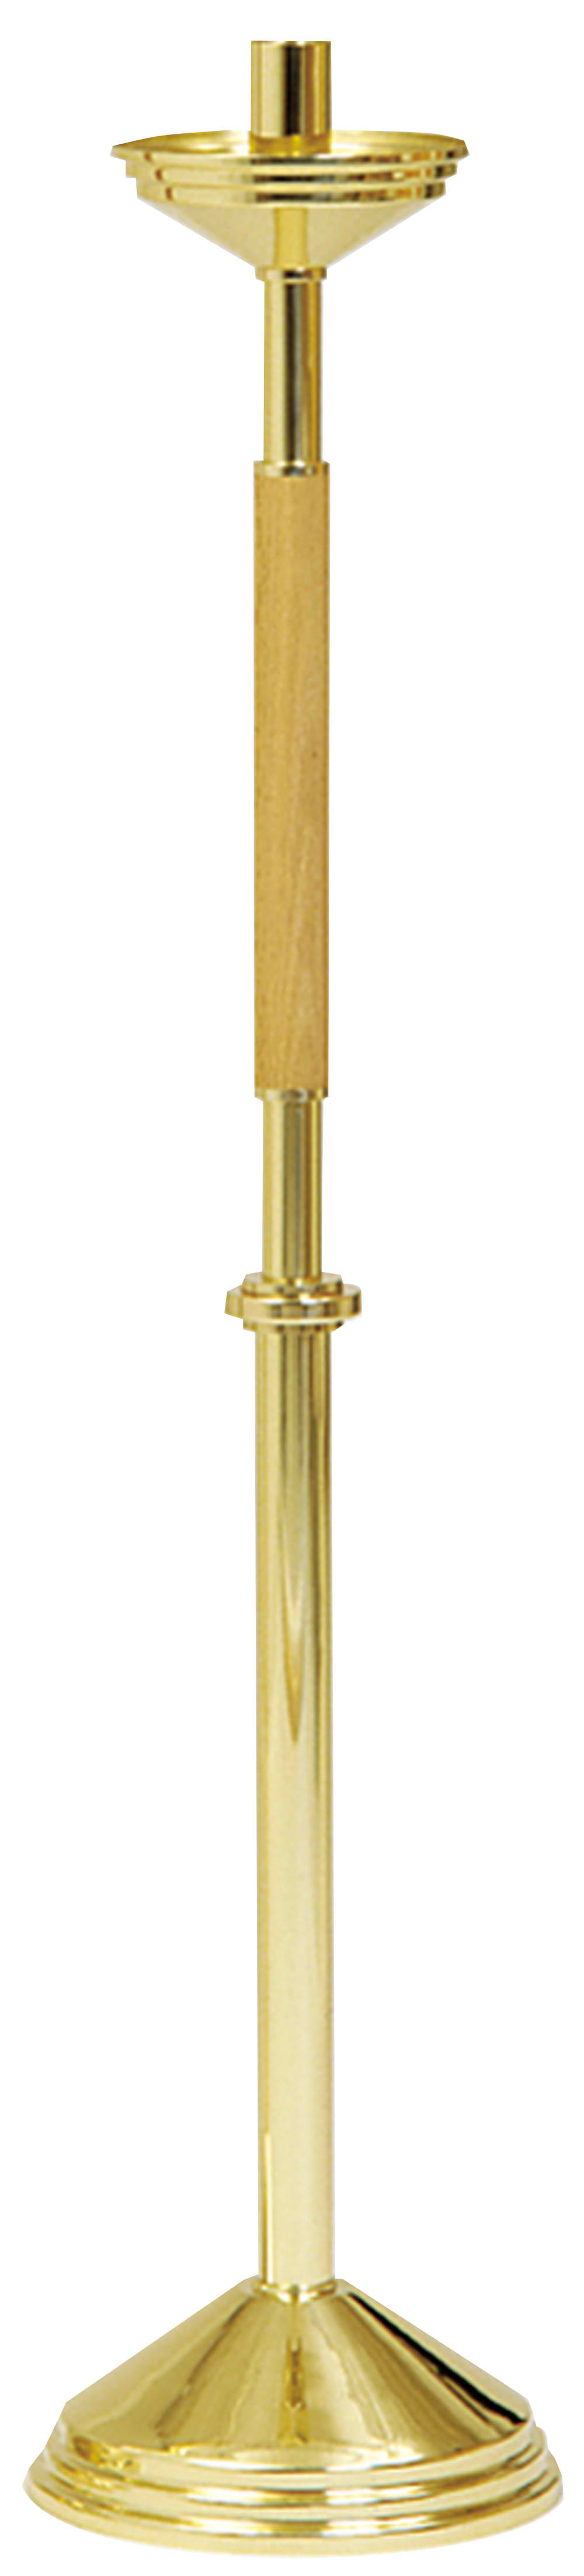 K758 Processional Candlestick